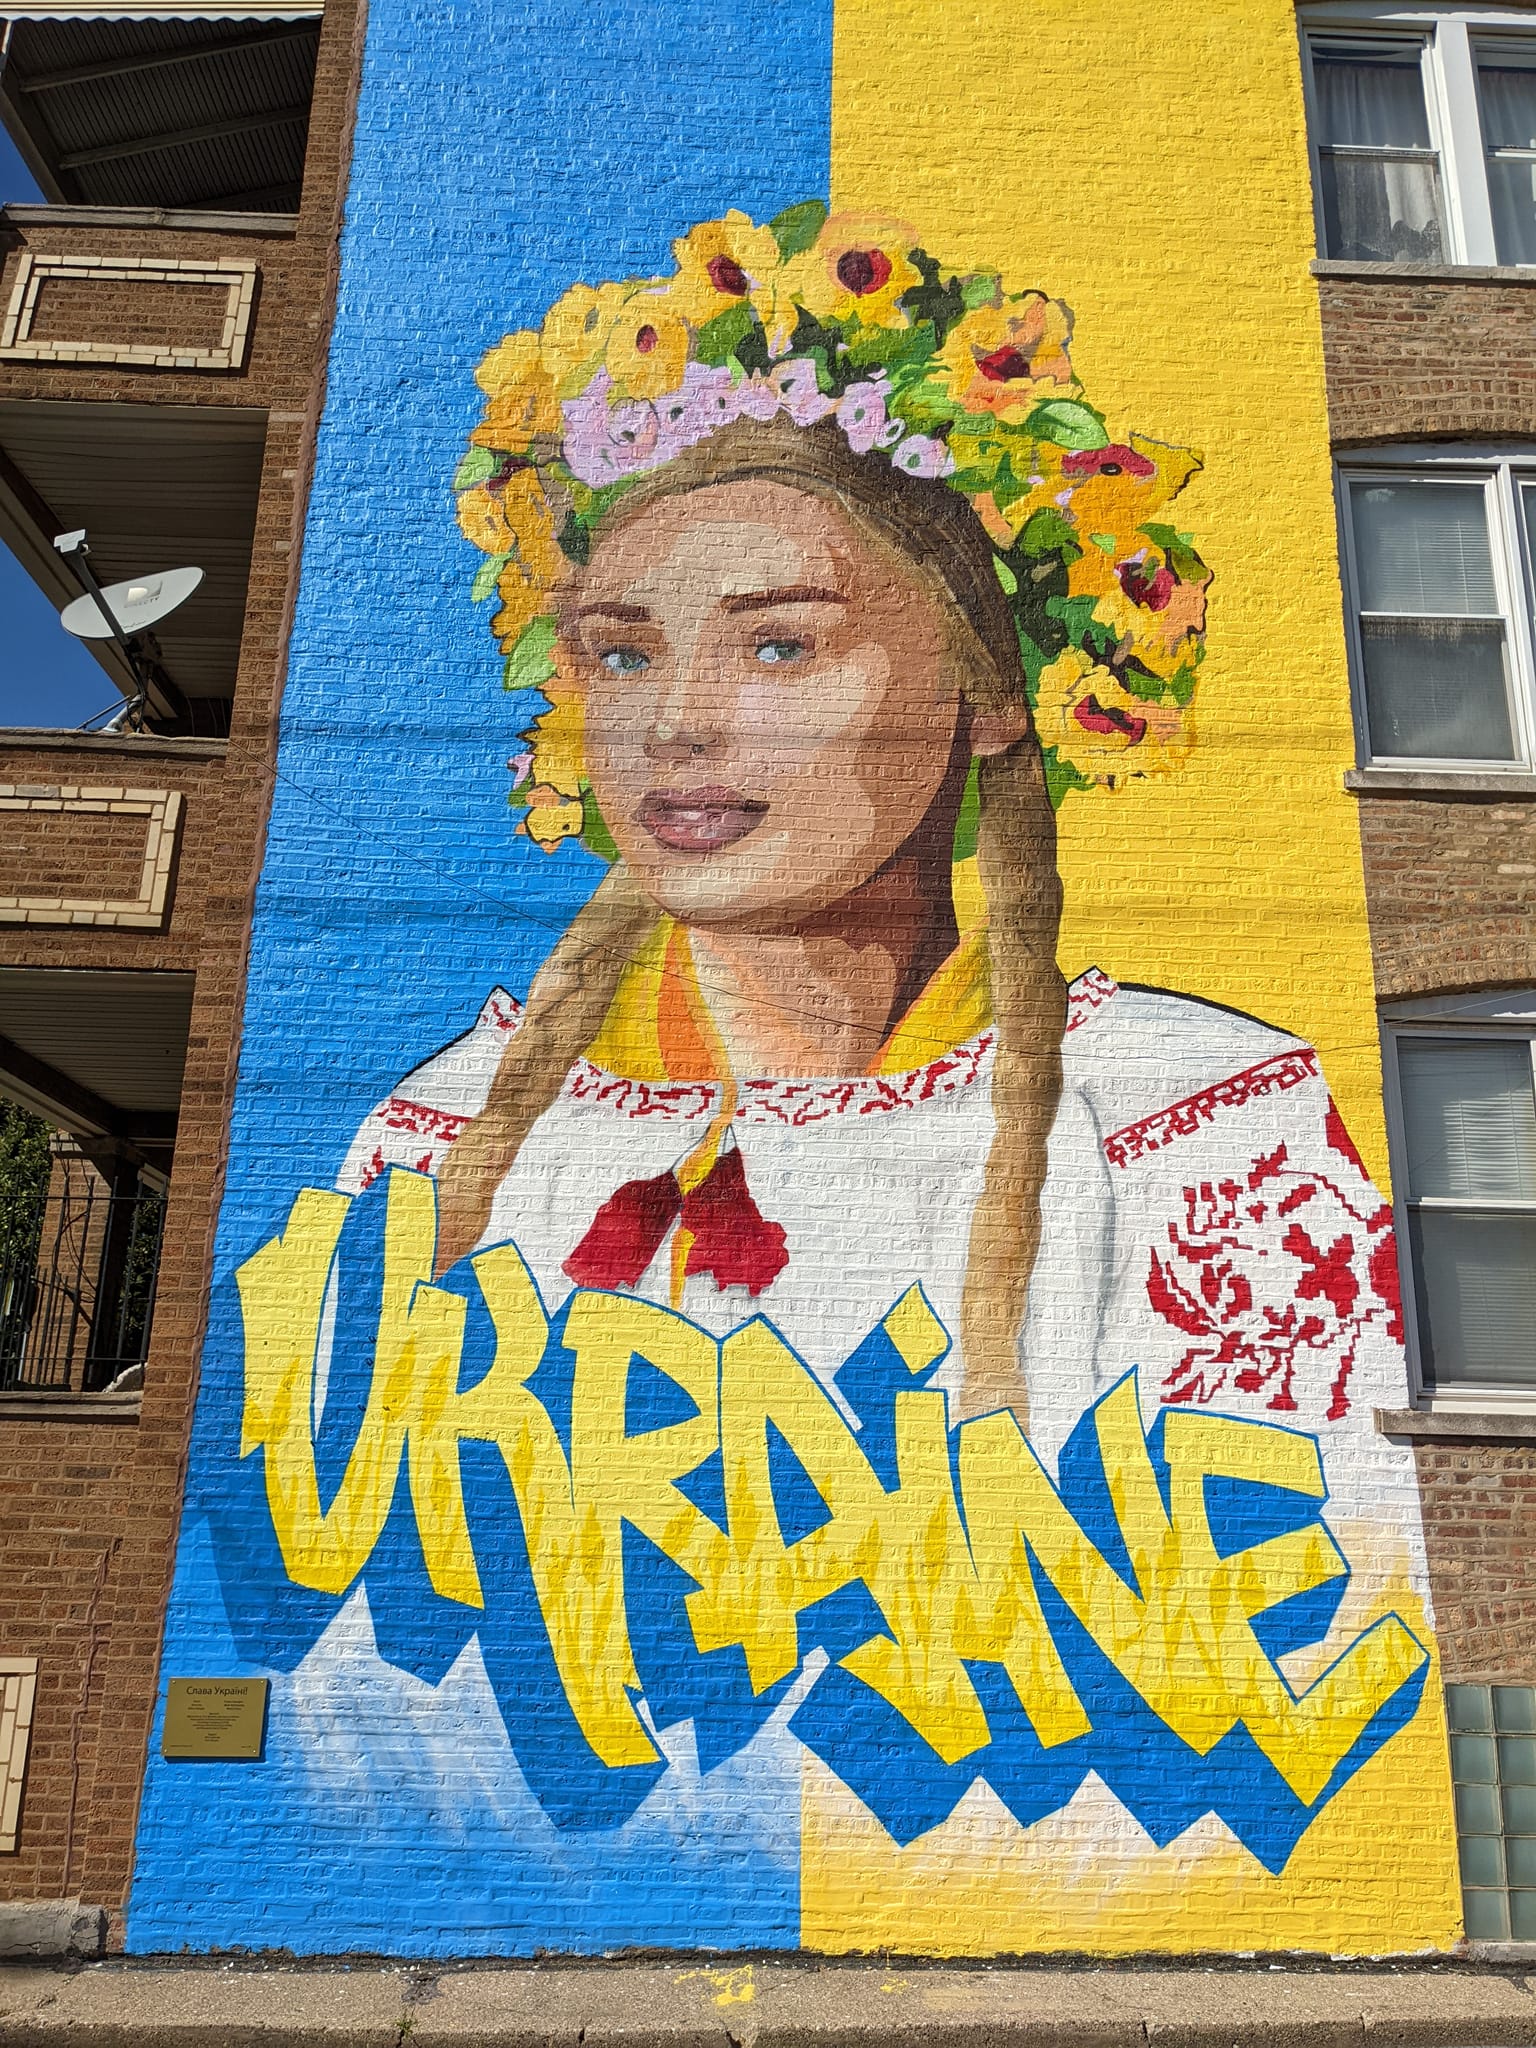 Featured image for “Ukrainian Village Mural”